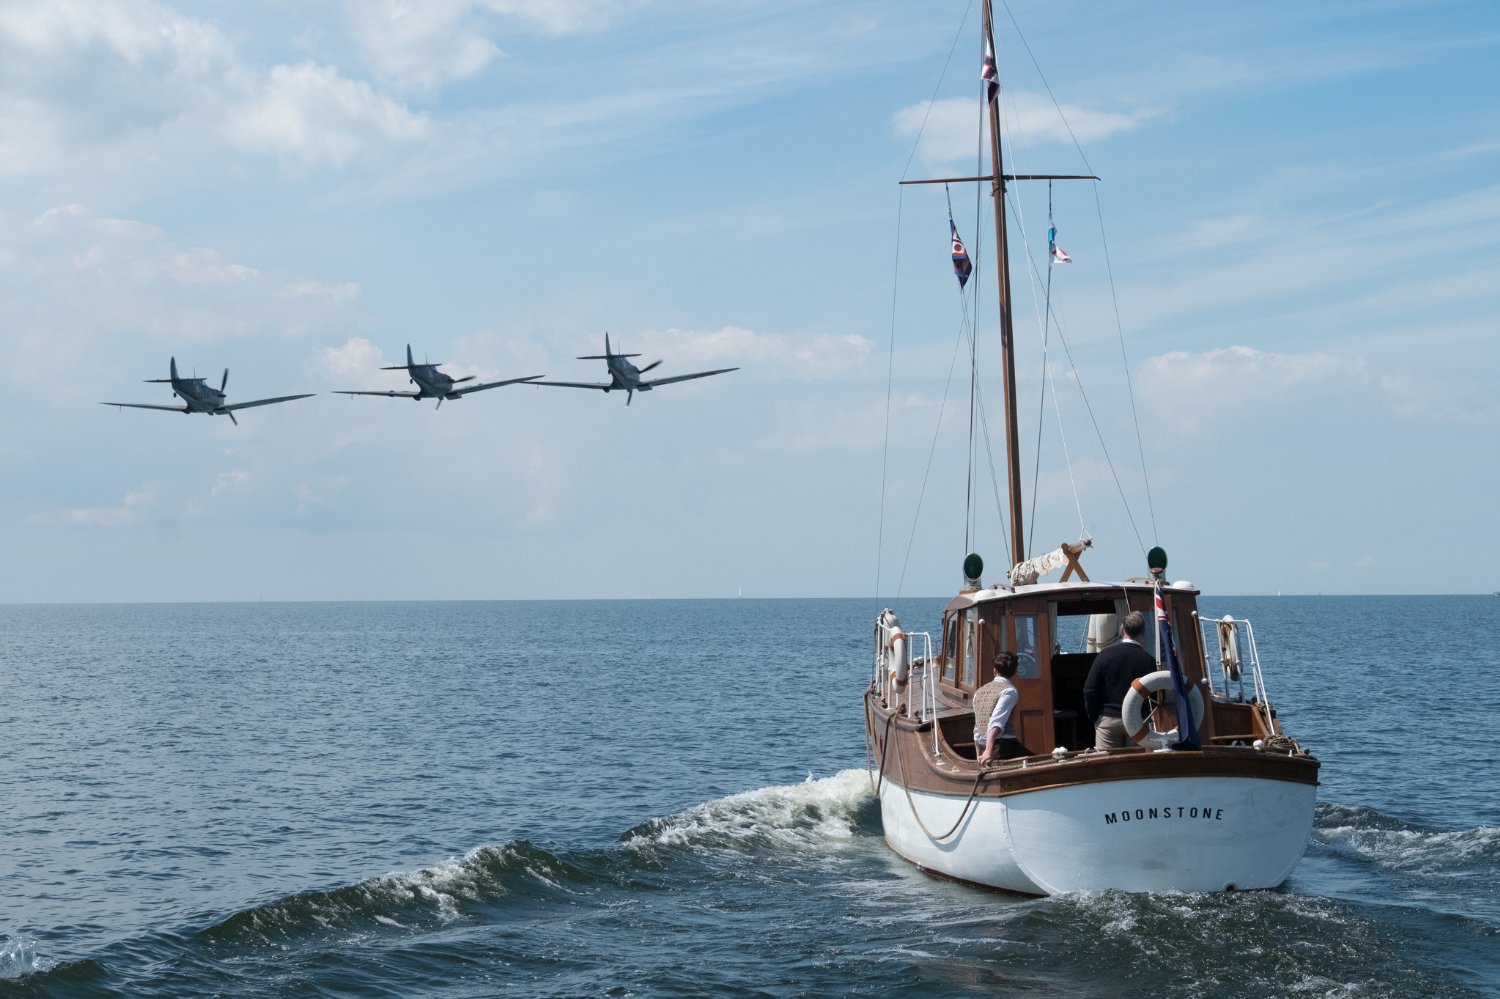 Free IMAX Movie Screening of Dunkirk